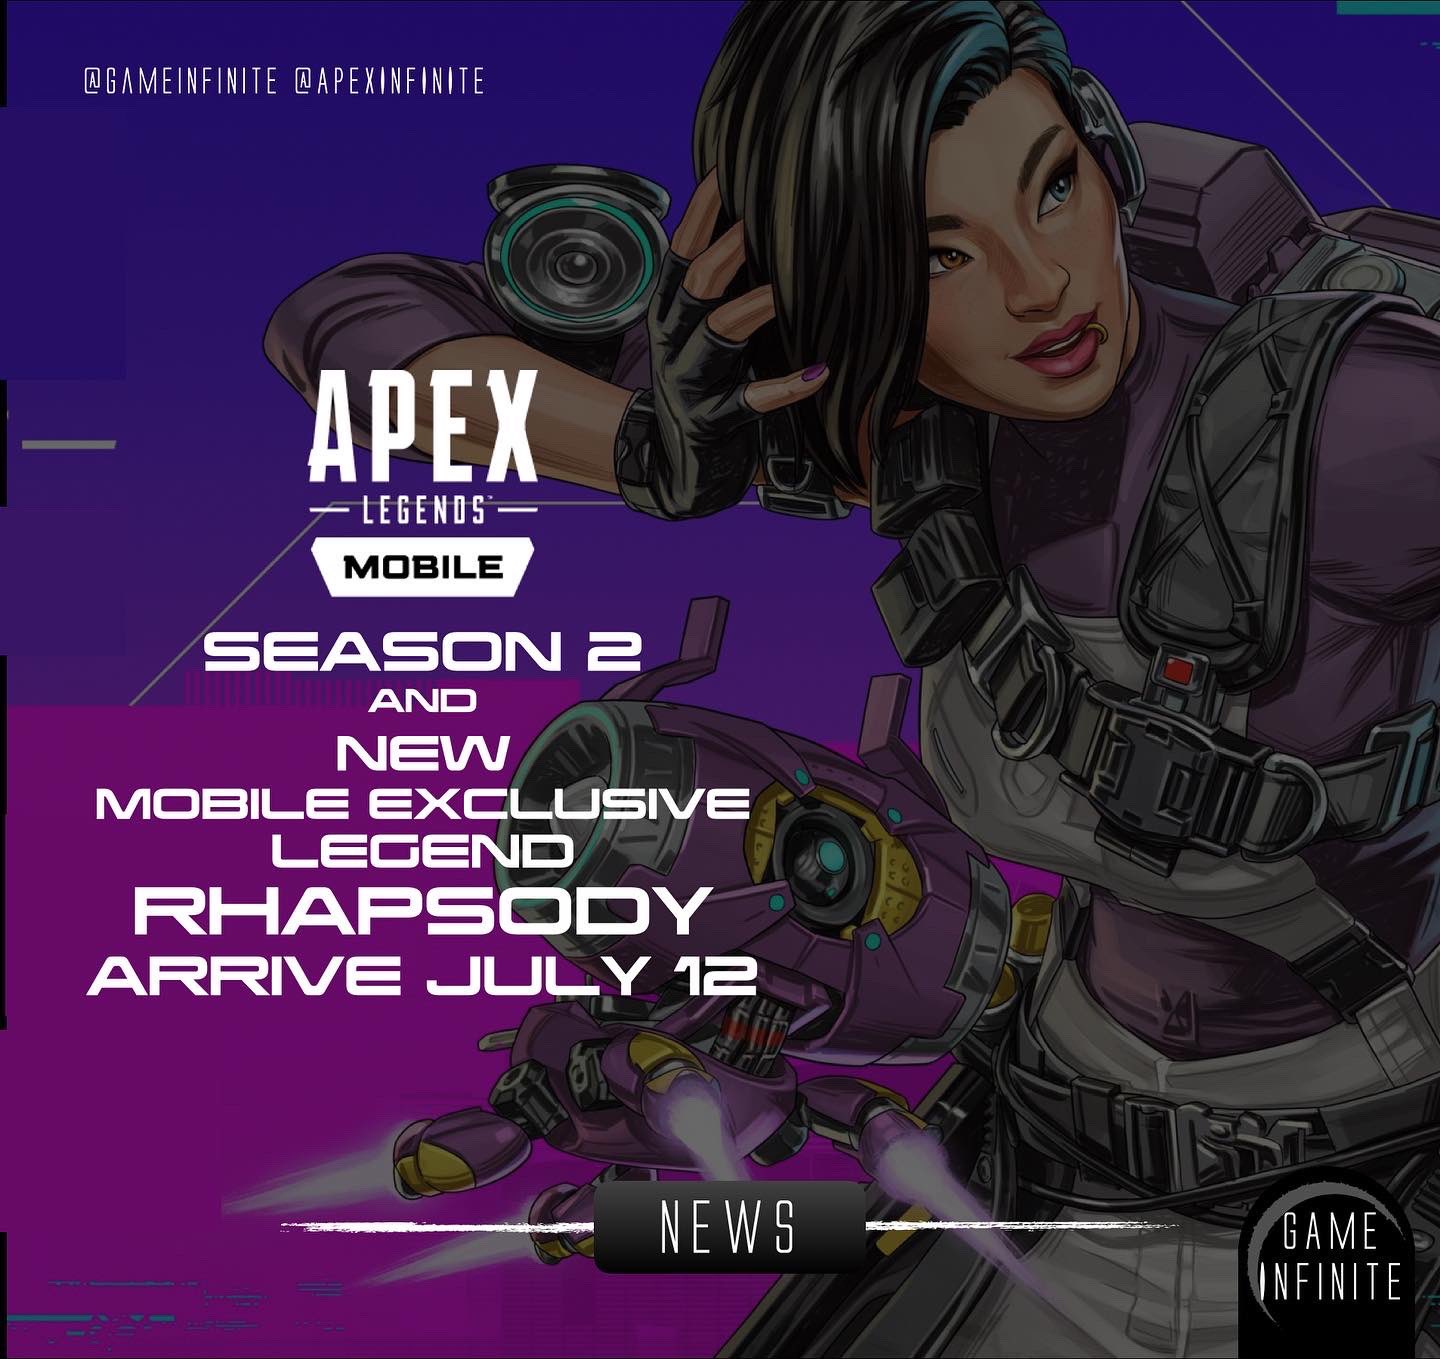 Apex Legends Mobile season 2 launching on July 12